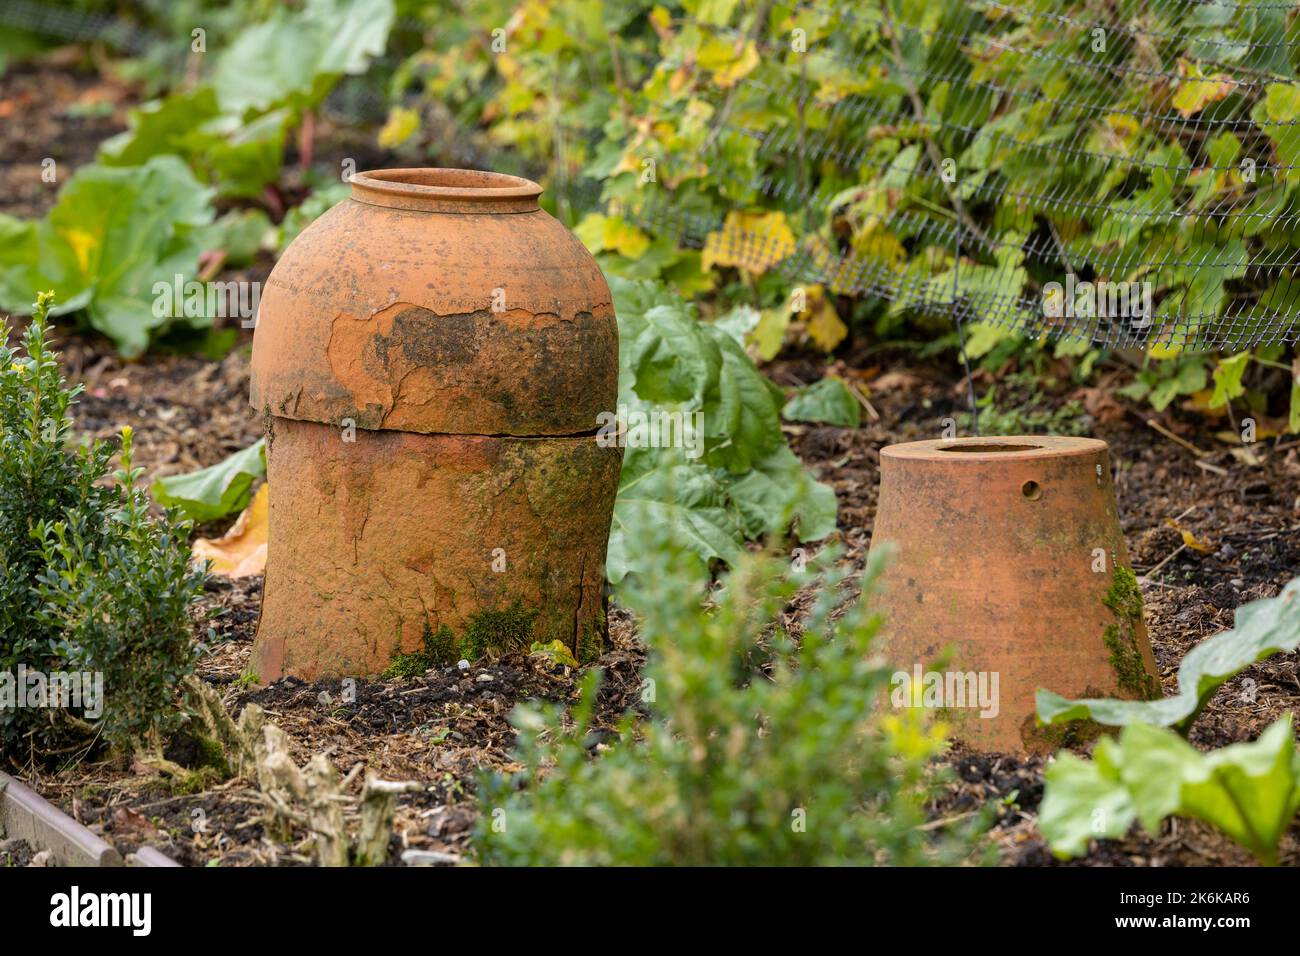 Tradizionali vasi di terracotta forzati in giardino di rabarbaro Foto Stock